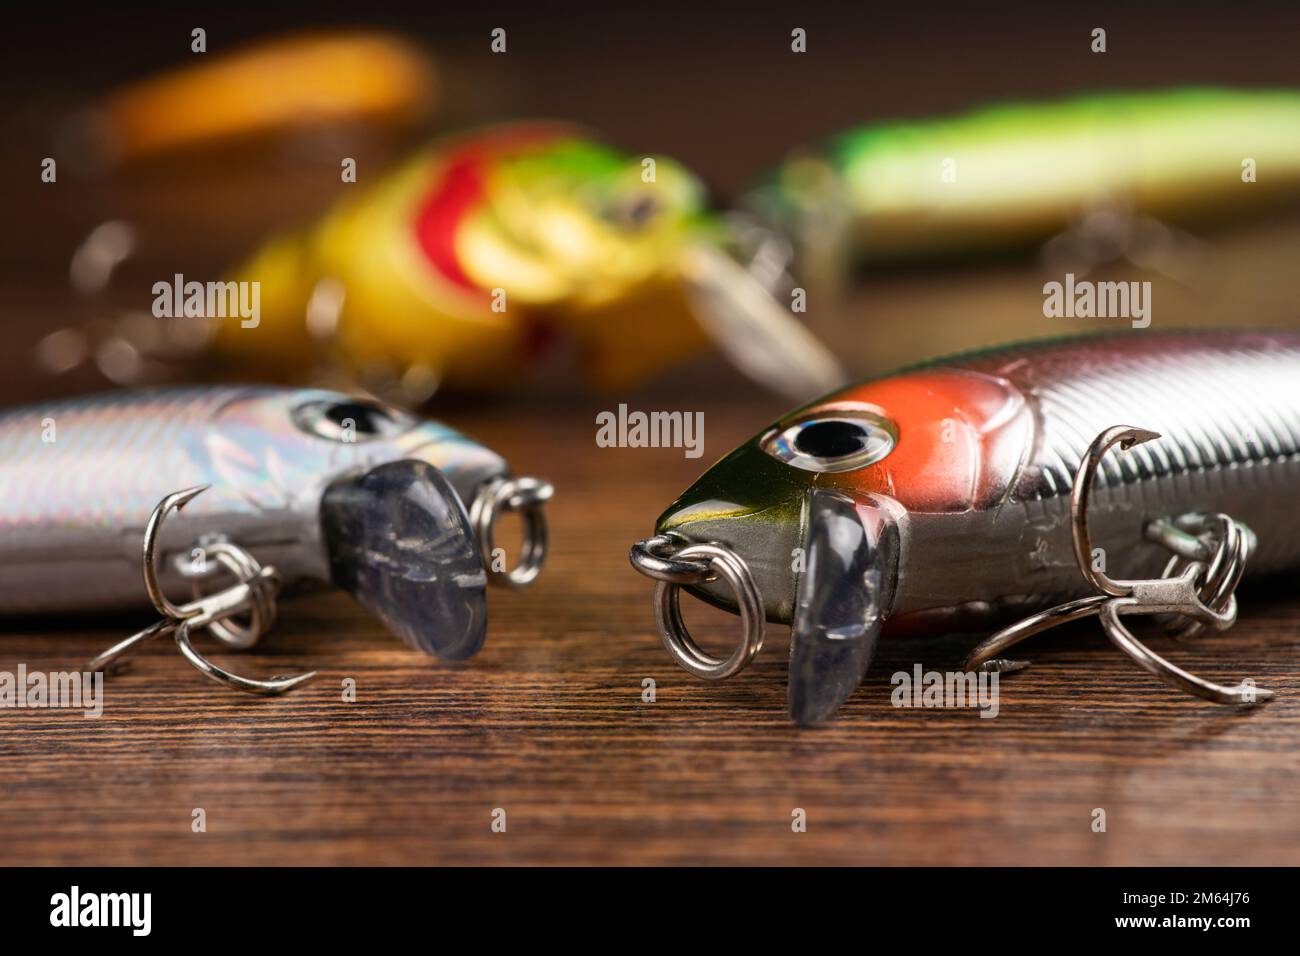 https://c8.alamy.com/comp/2M64J76/colorful-fishing-lures-wobbler-spinner-on-wood-desk-different-fishing-baits-2M64J76.jpg